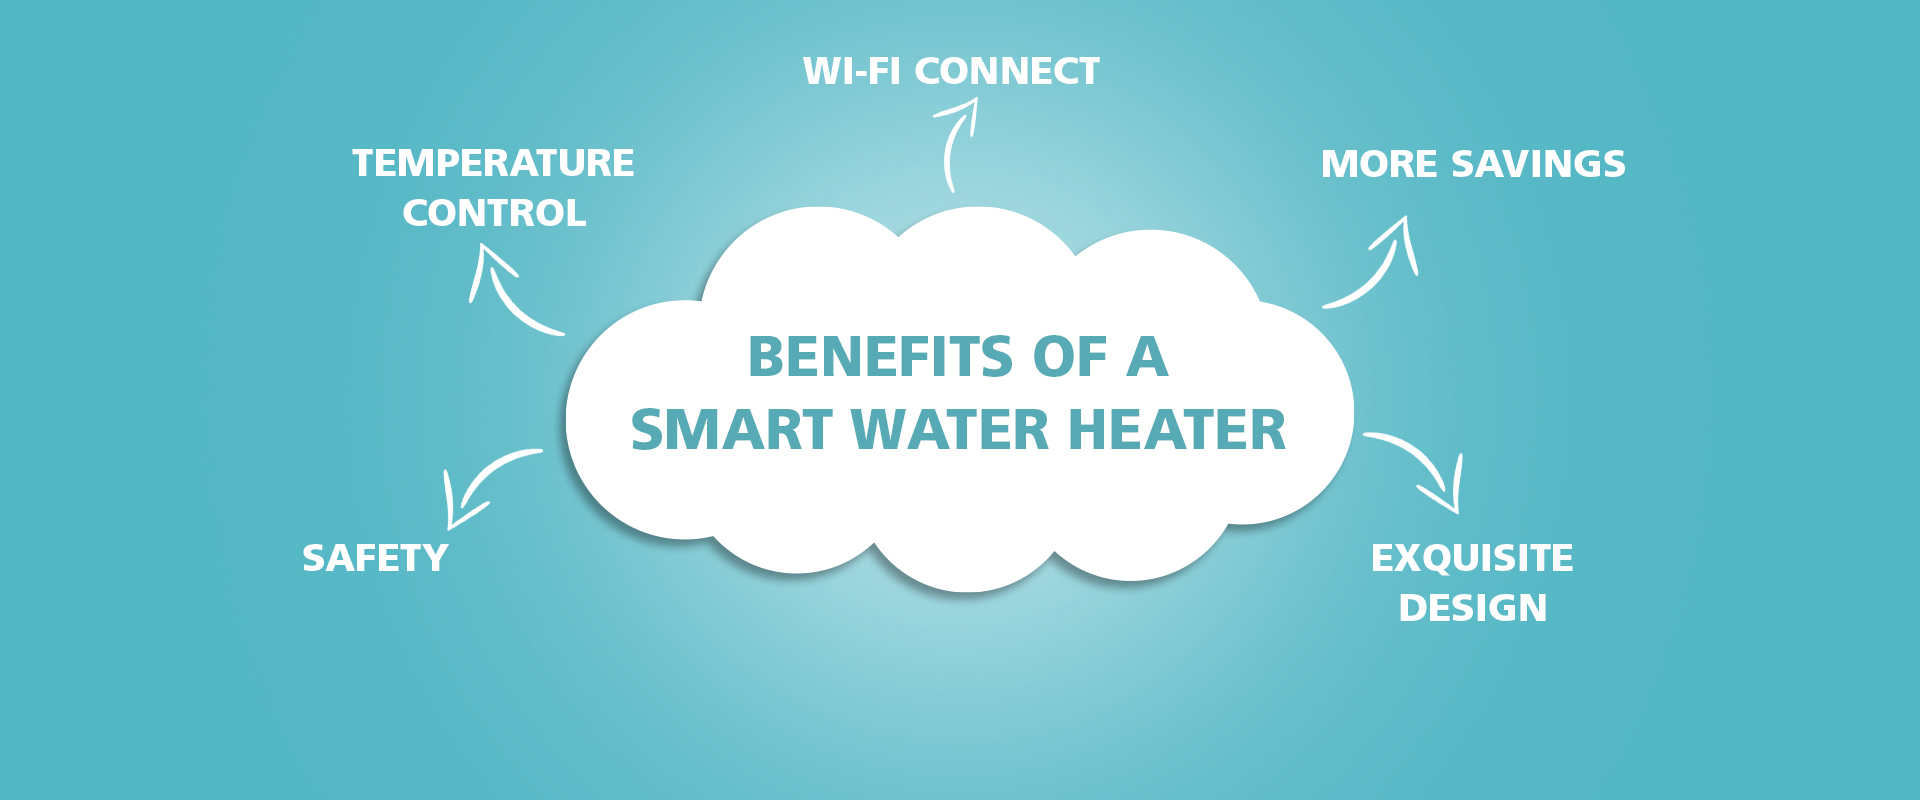 Benefits of a smart water heater